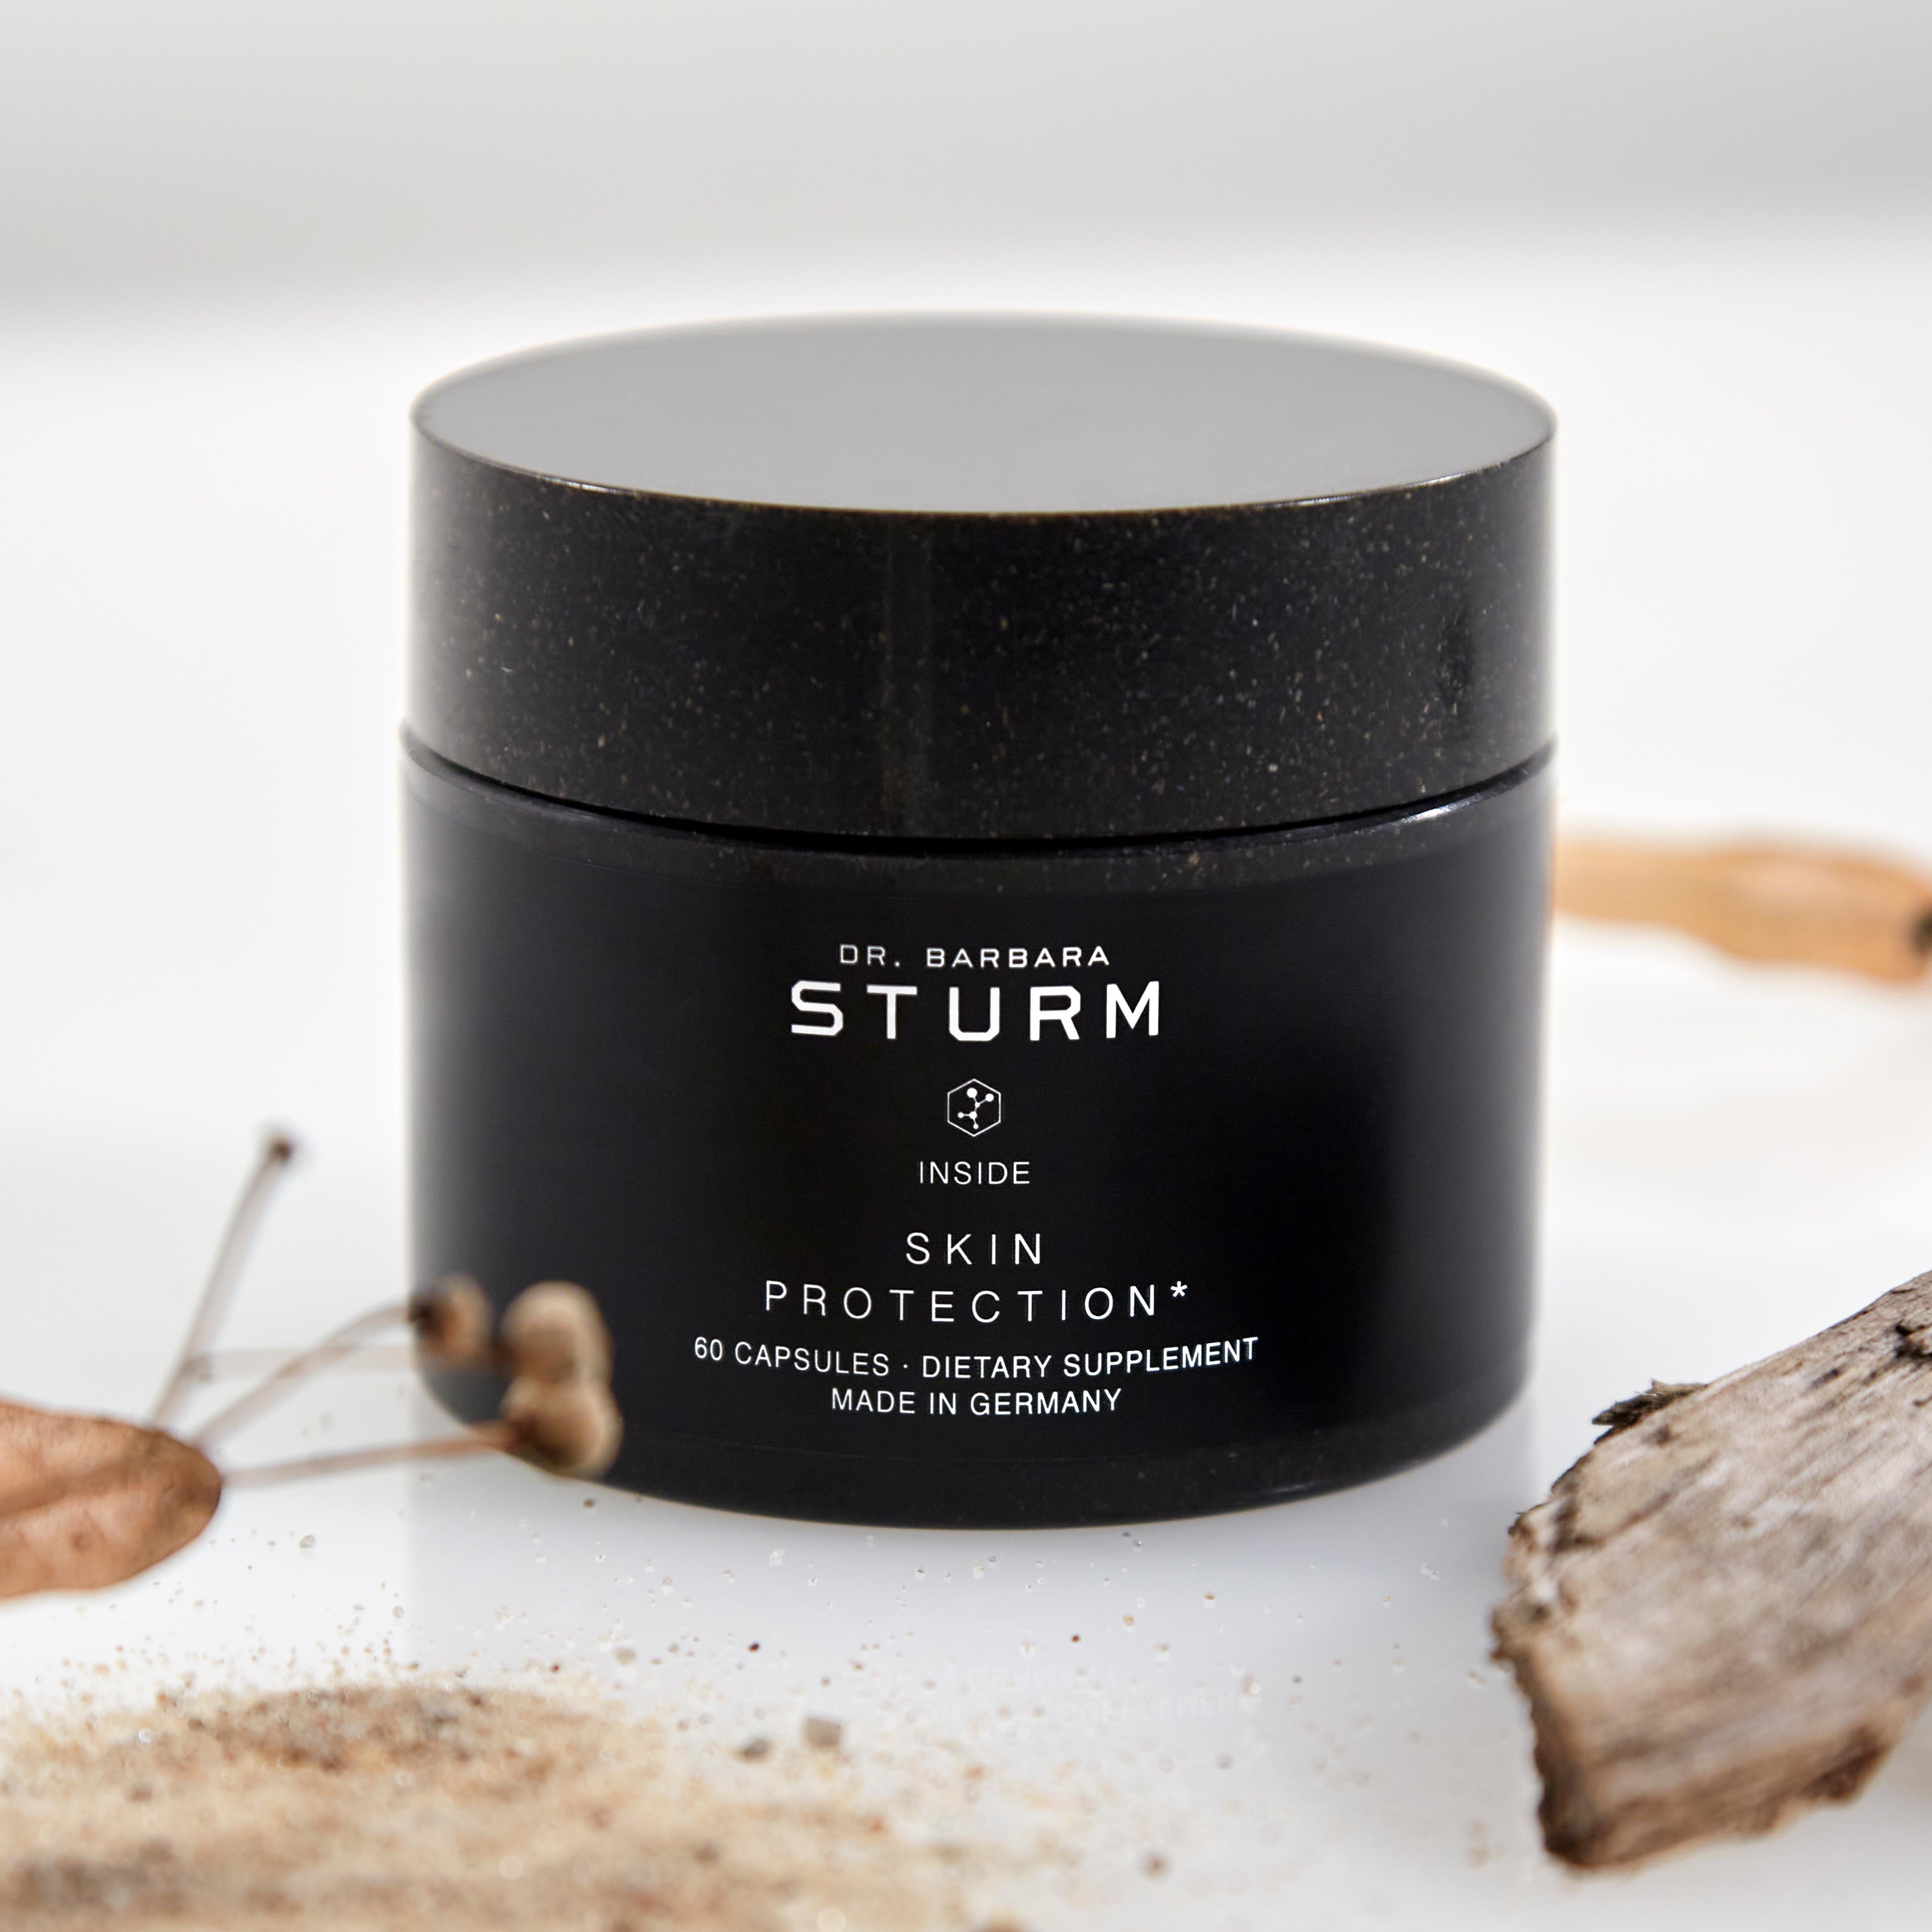 Shop Dr. Barbara Sturm's Skin Protection on Beautylish.com